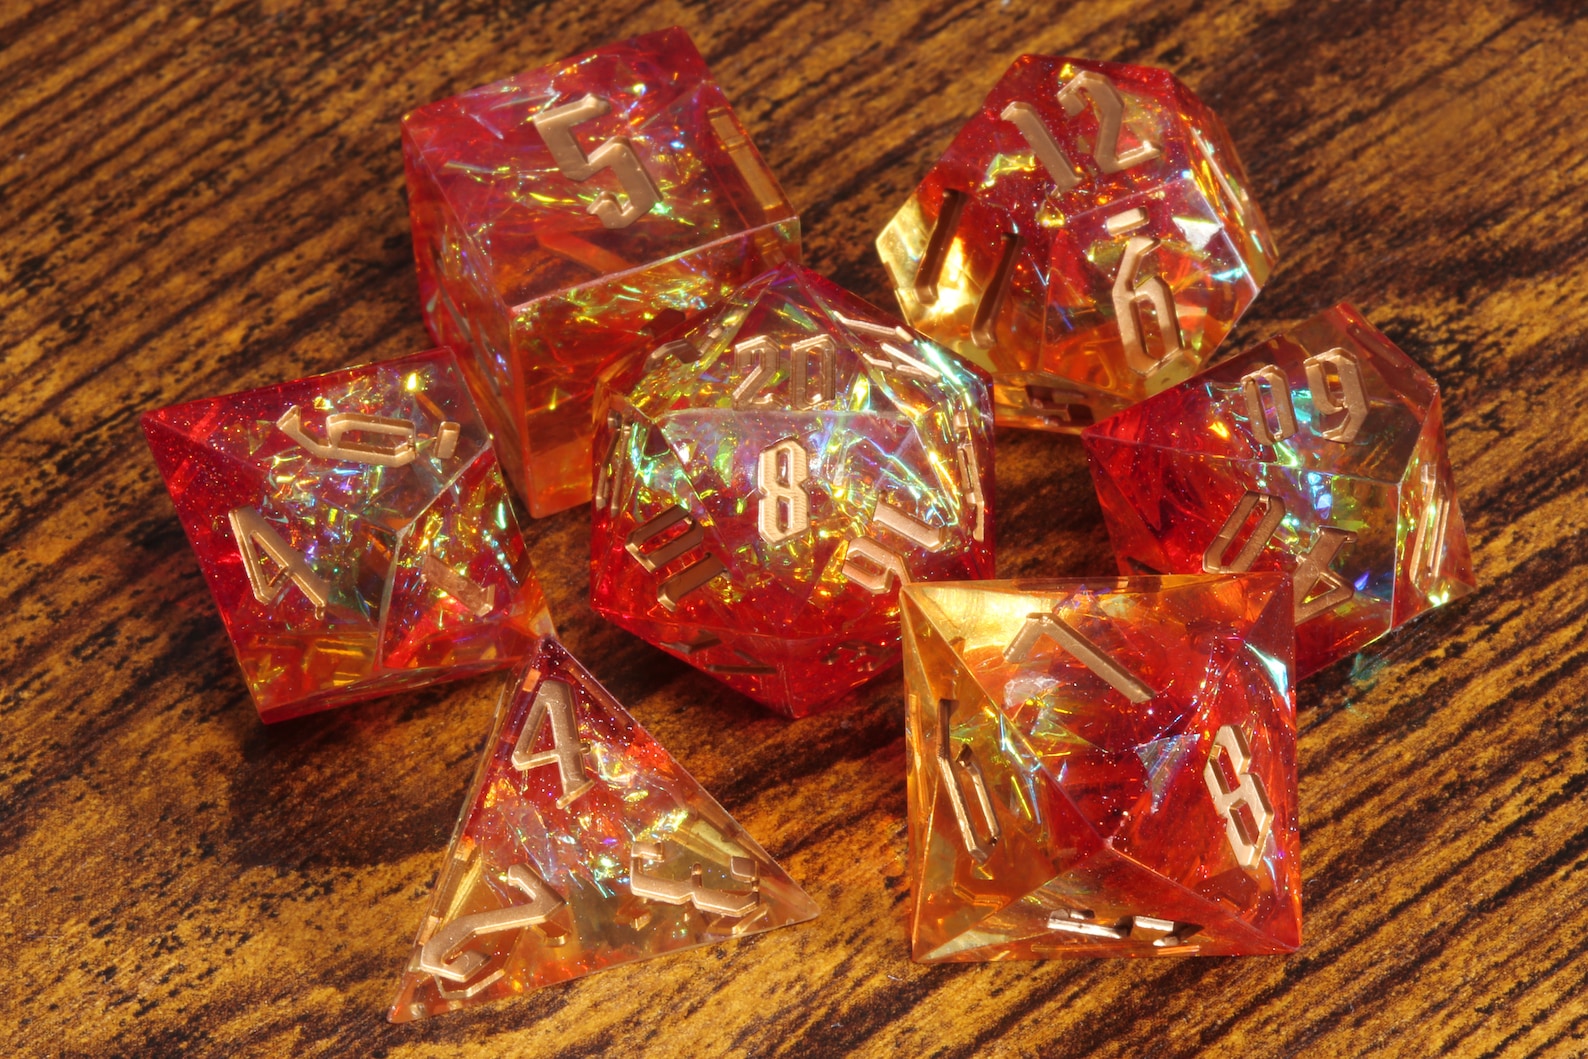 Pyromancer's Ritual dice set - Red, Orange sharp edge dice set with holographic foil - The Wizard's Vault